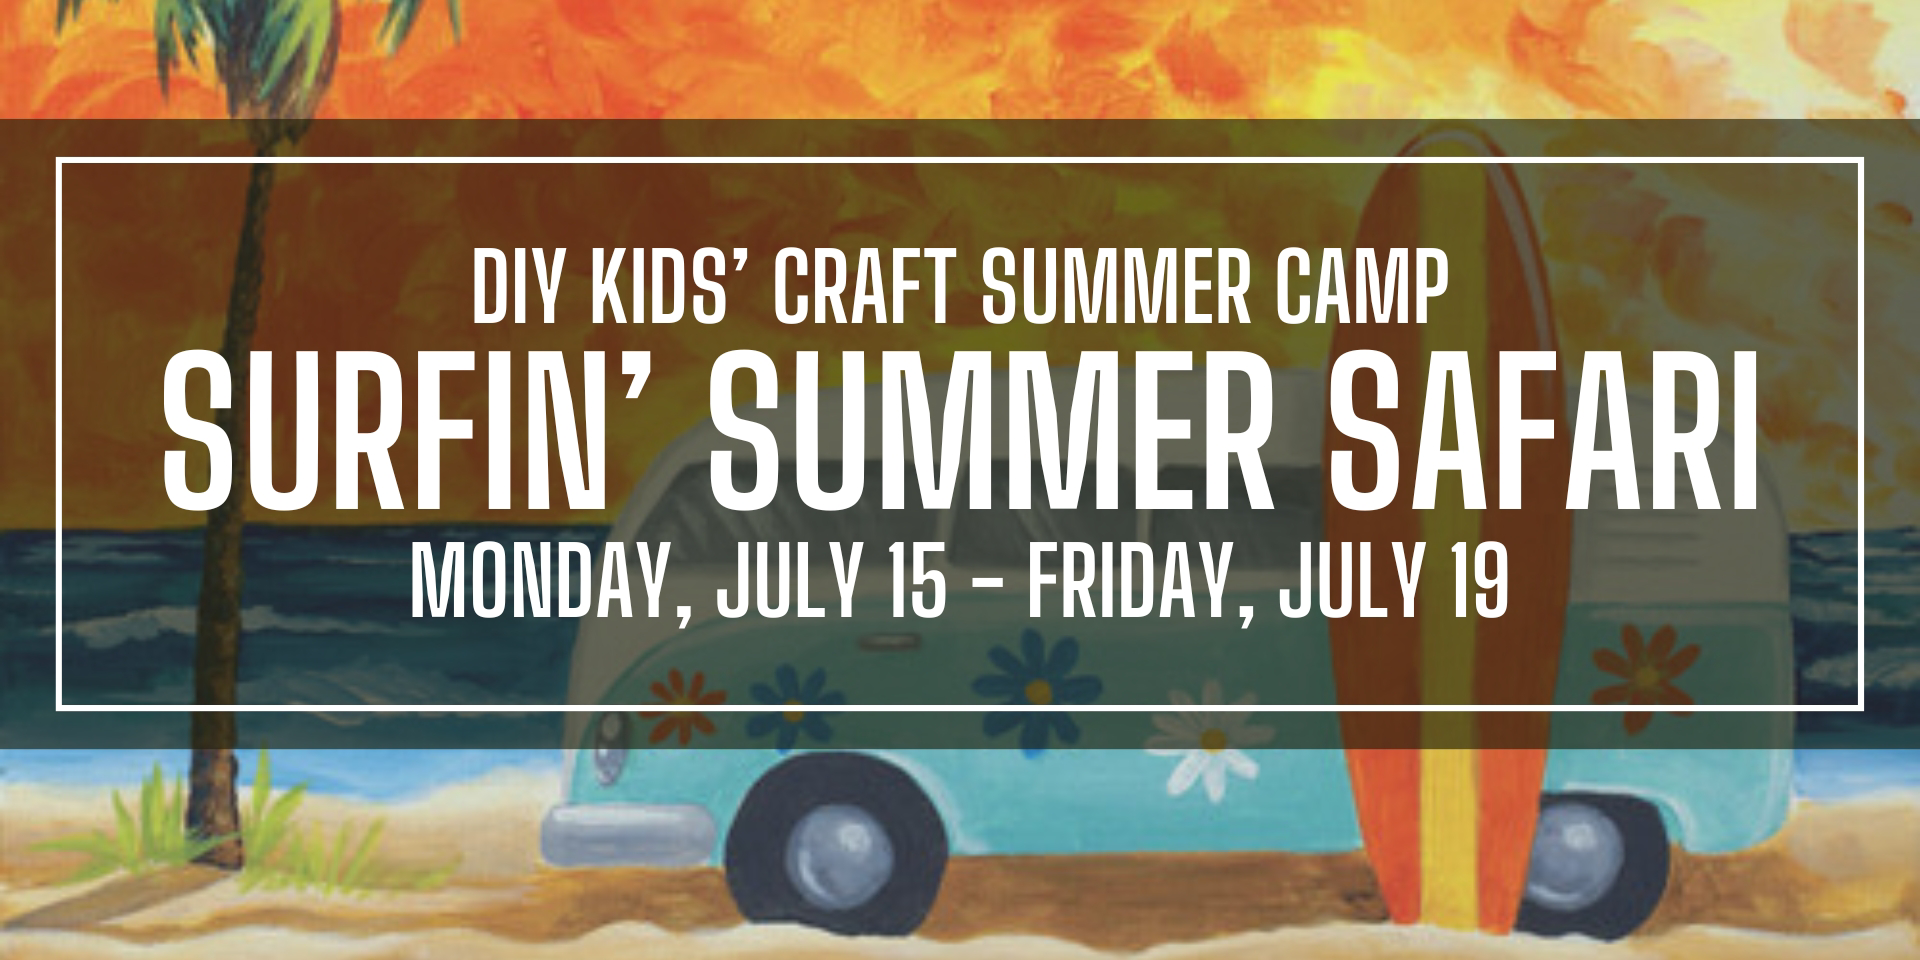 Surfin' Summer Safari DIY Kids' Craft Summer Camp